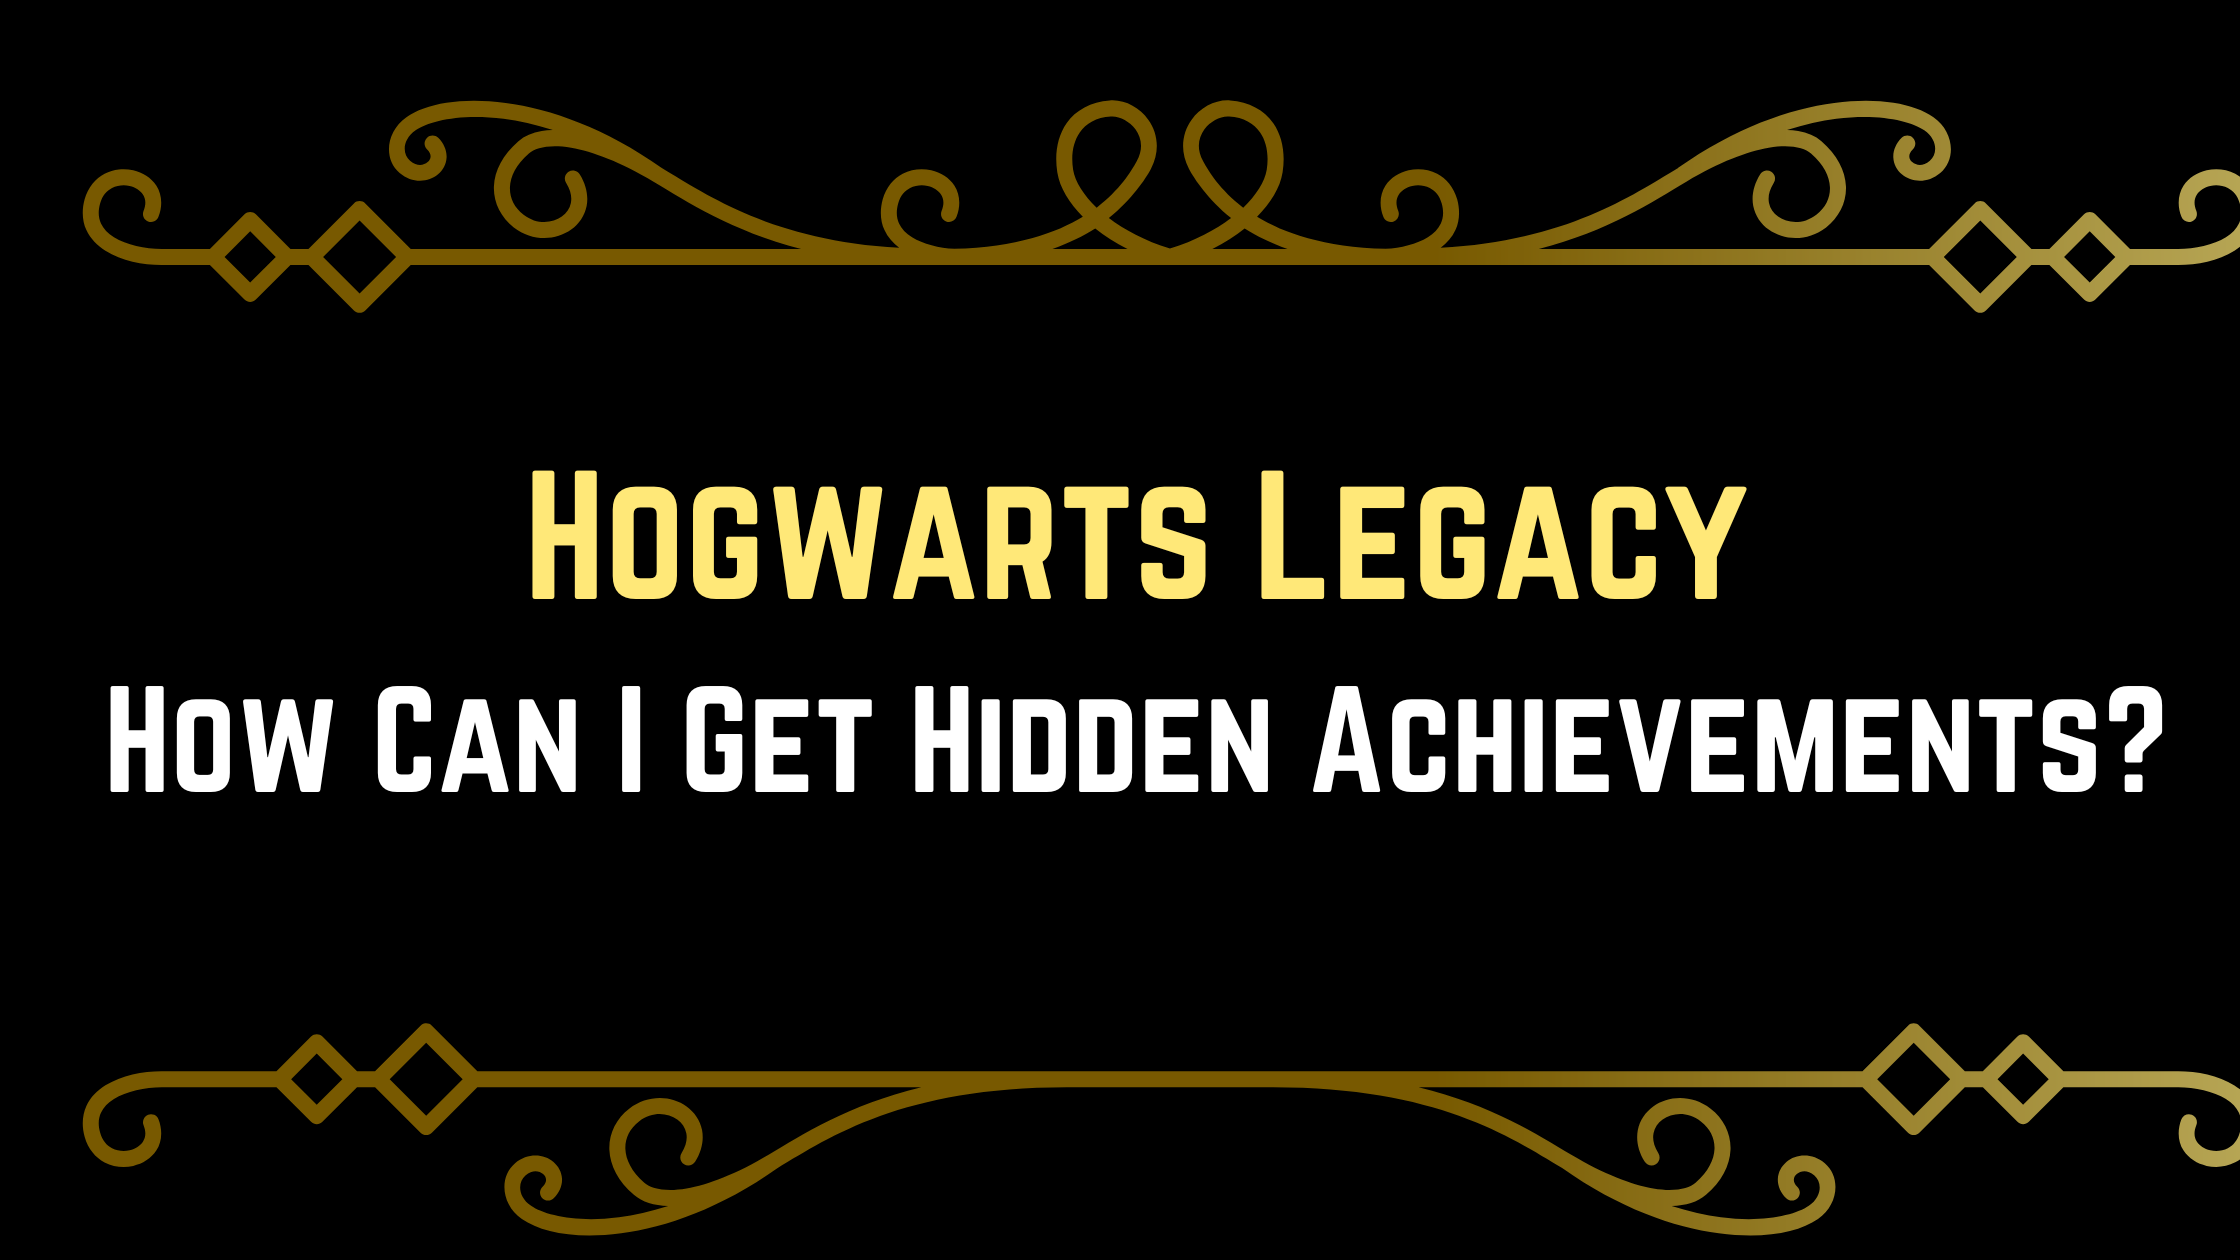 How Can I Get Hogwarts Legacy Hidden Achievements